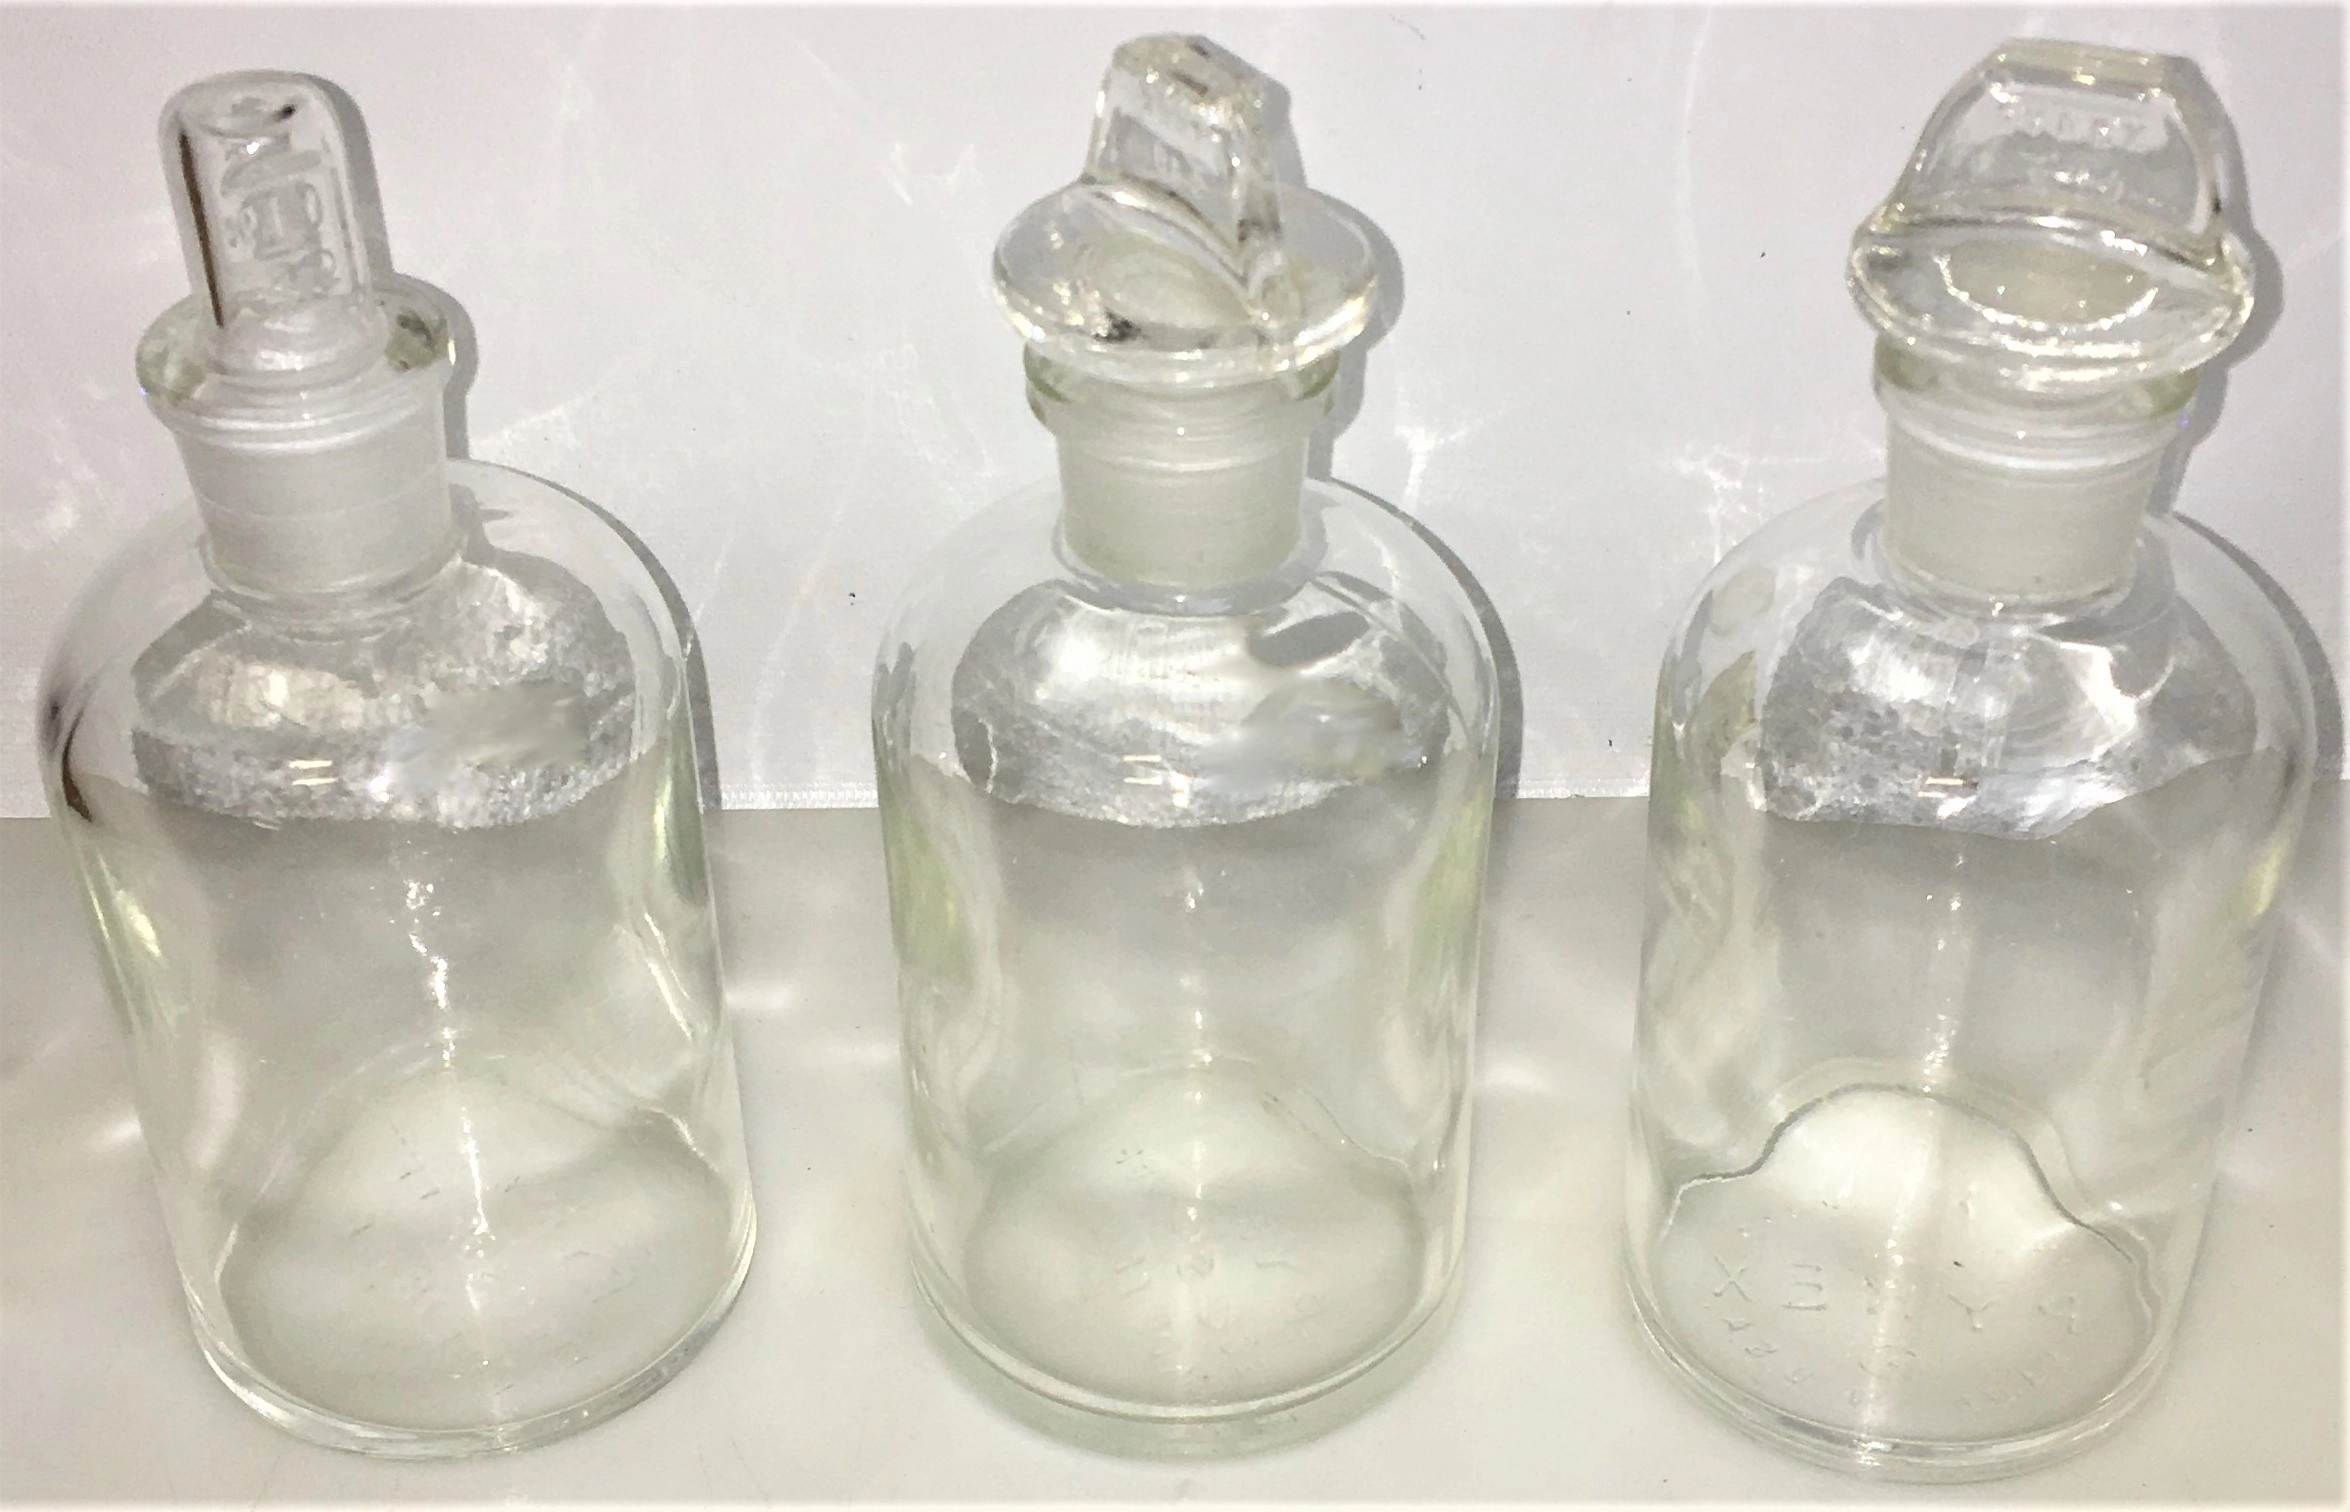 Nalgene™ PPCO Dilution Bottles with Closure